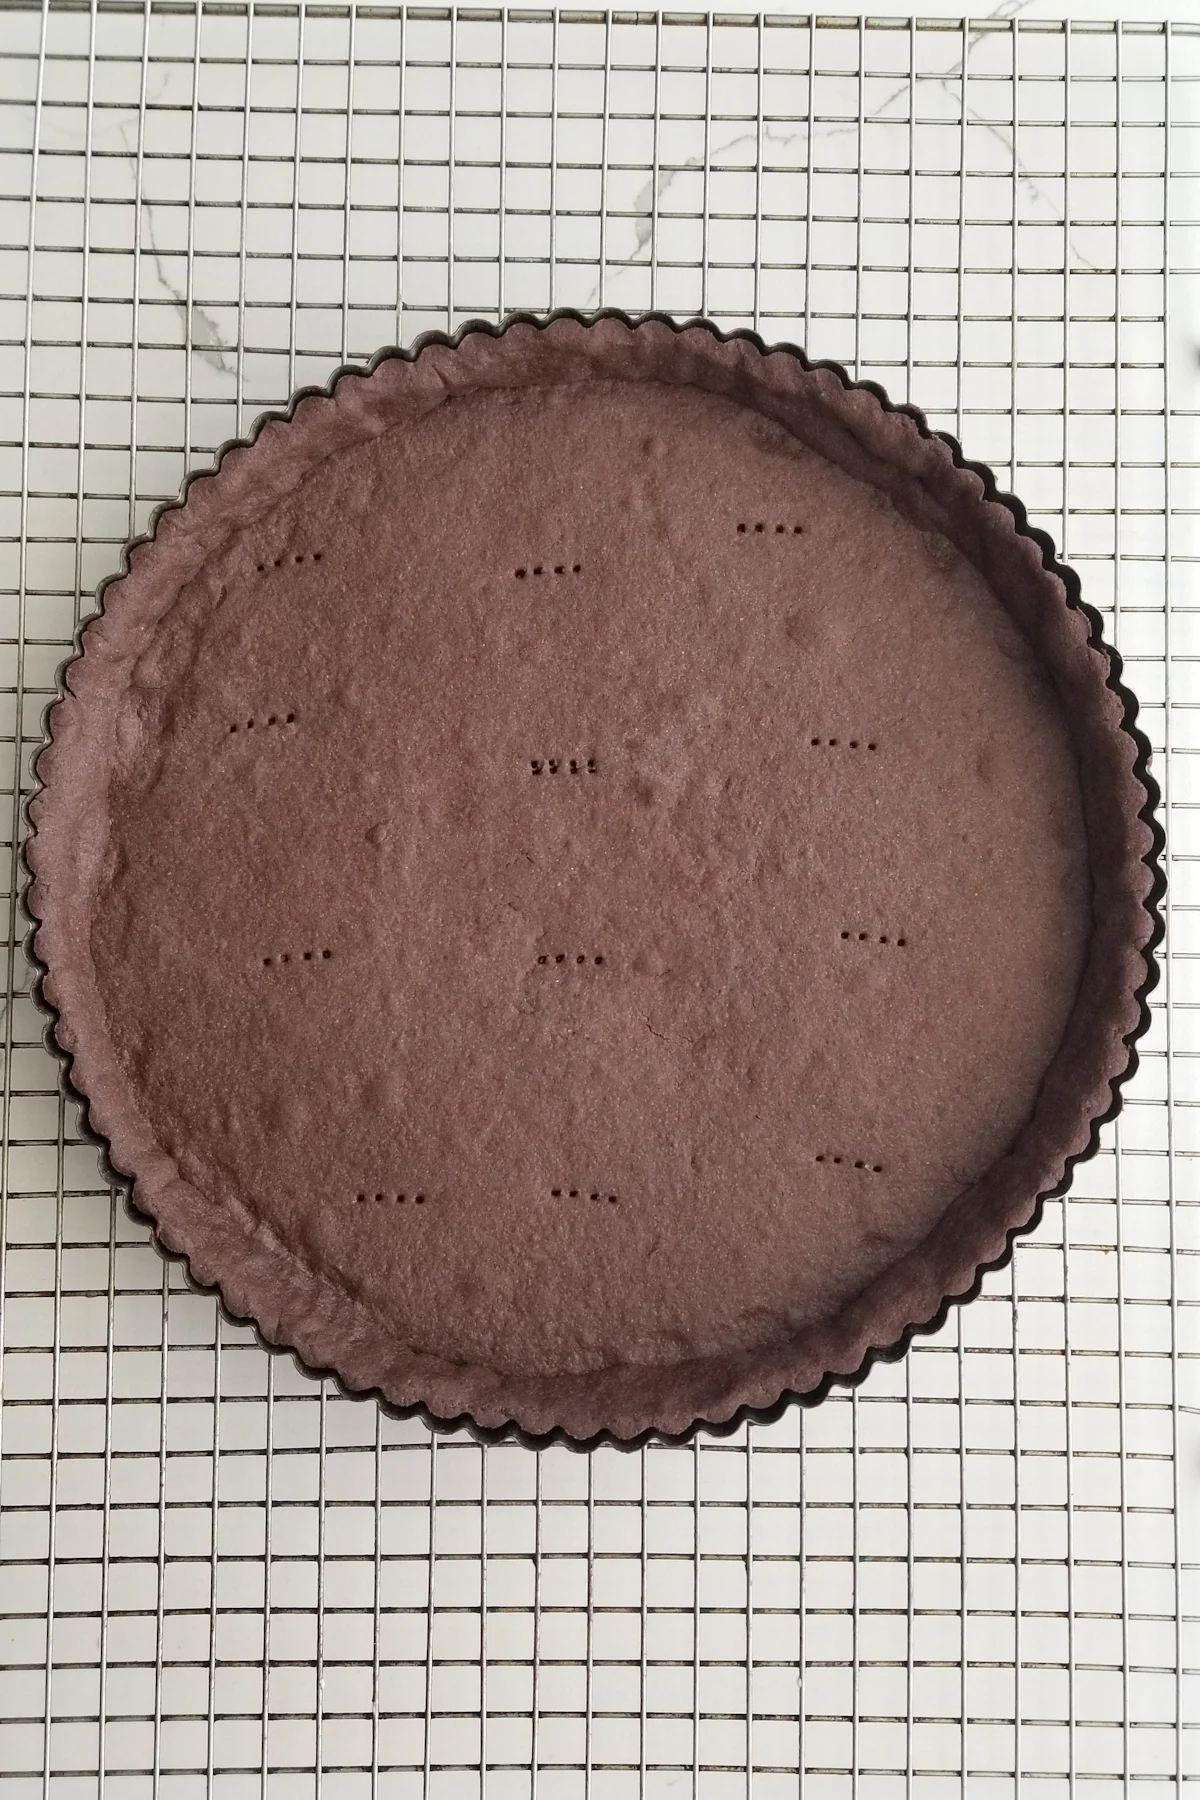 a baked chocolate tart crust.